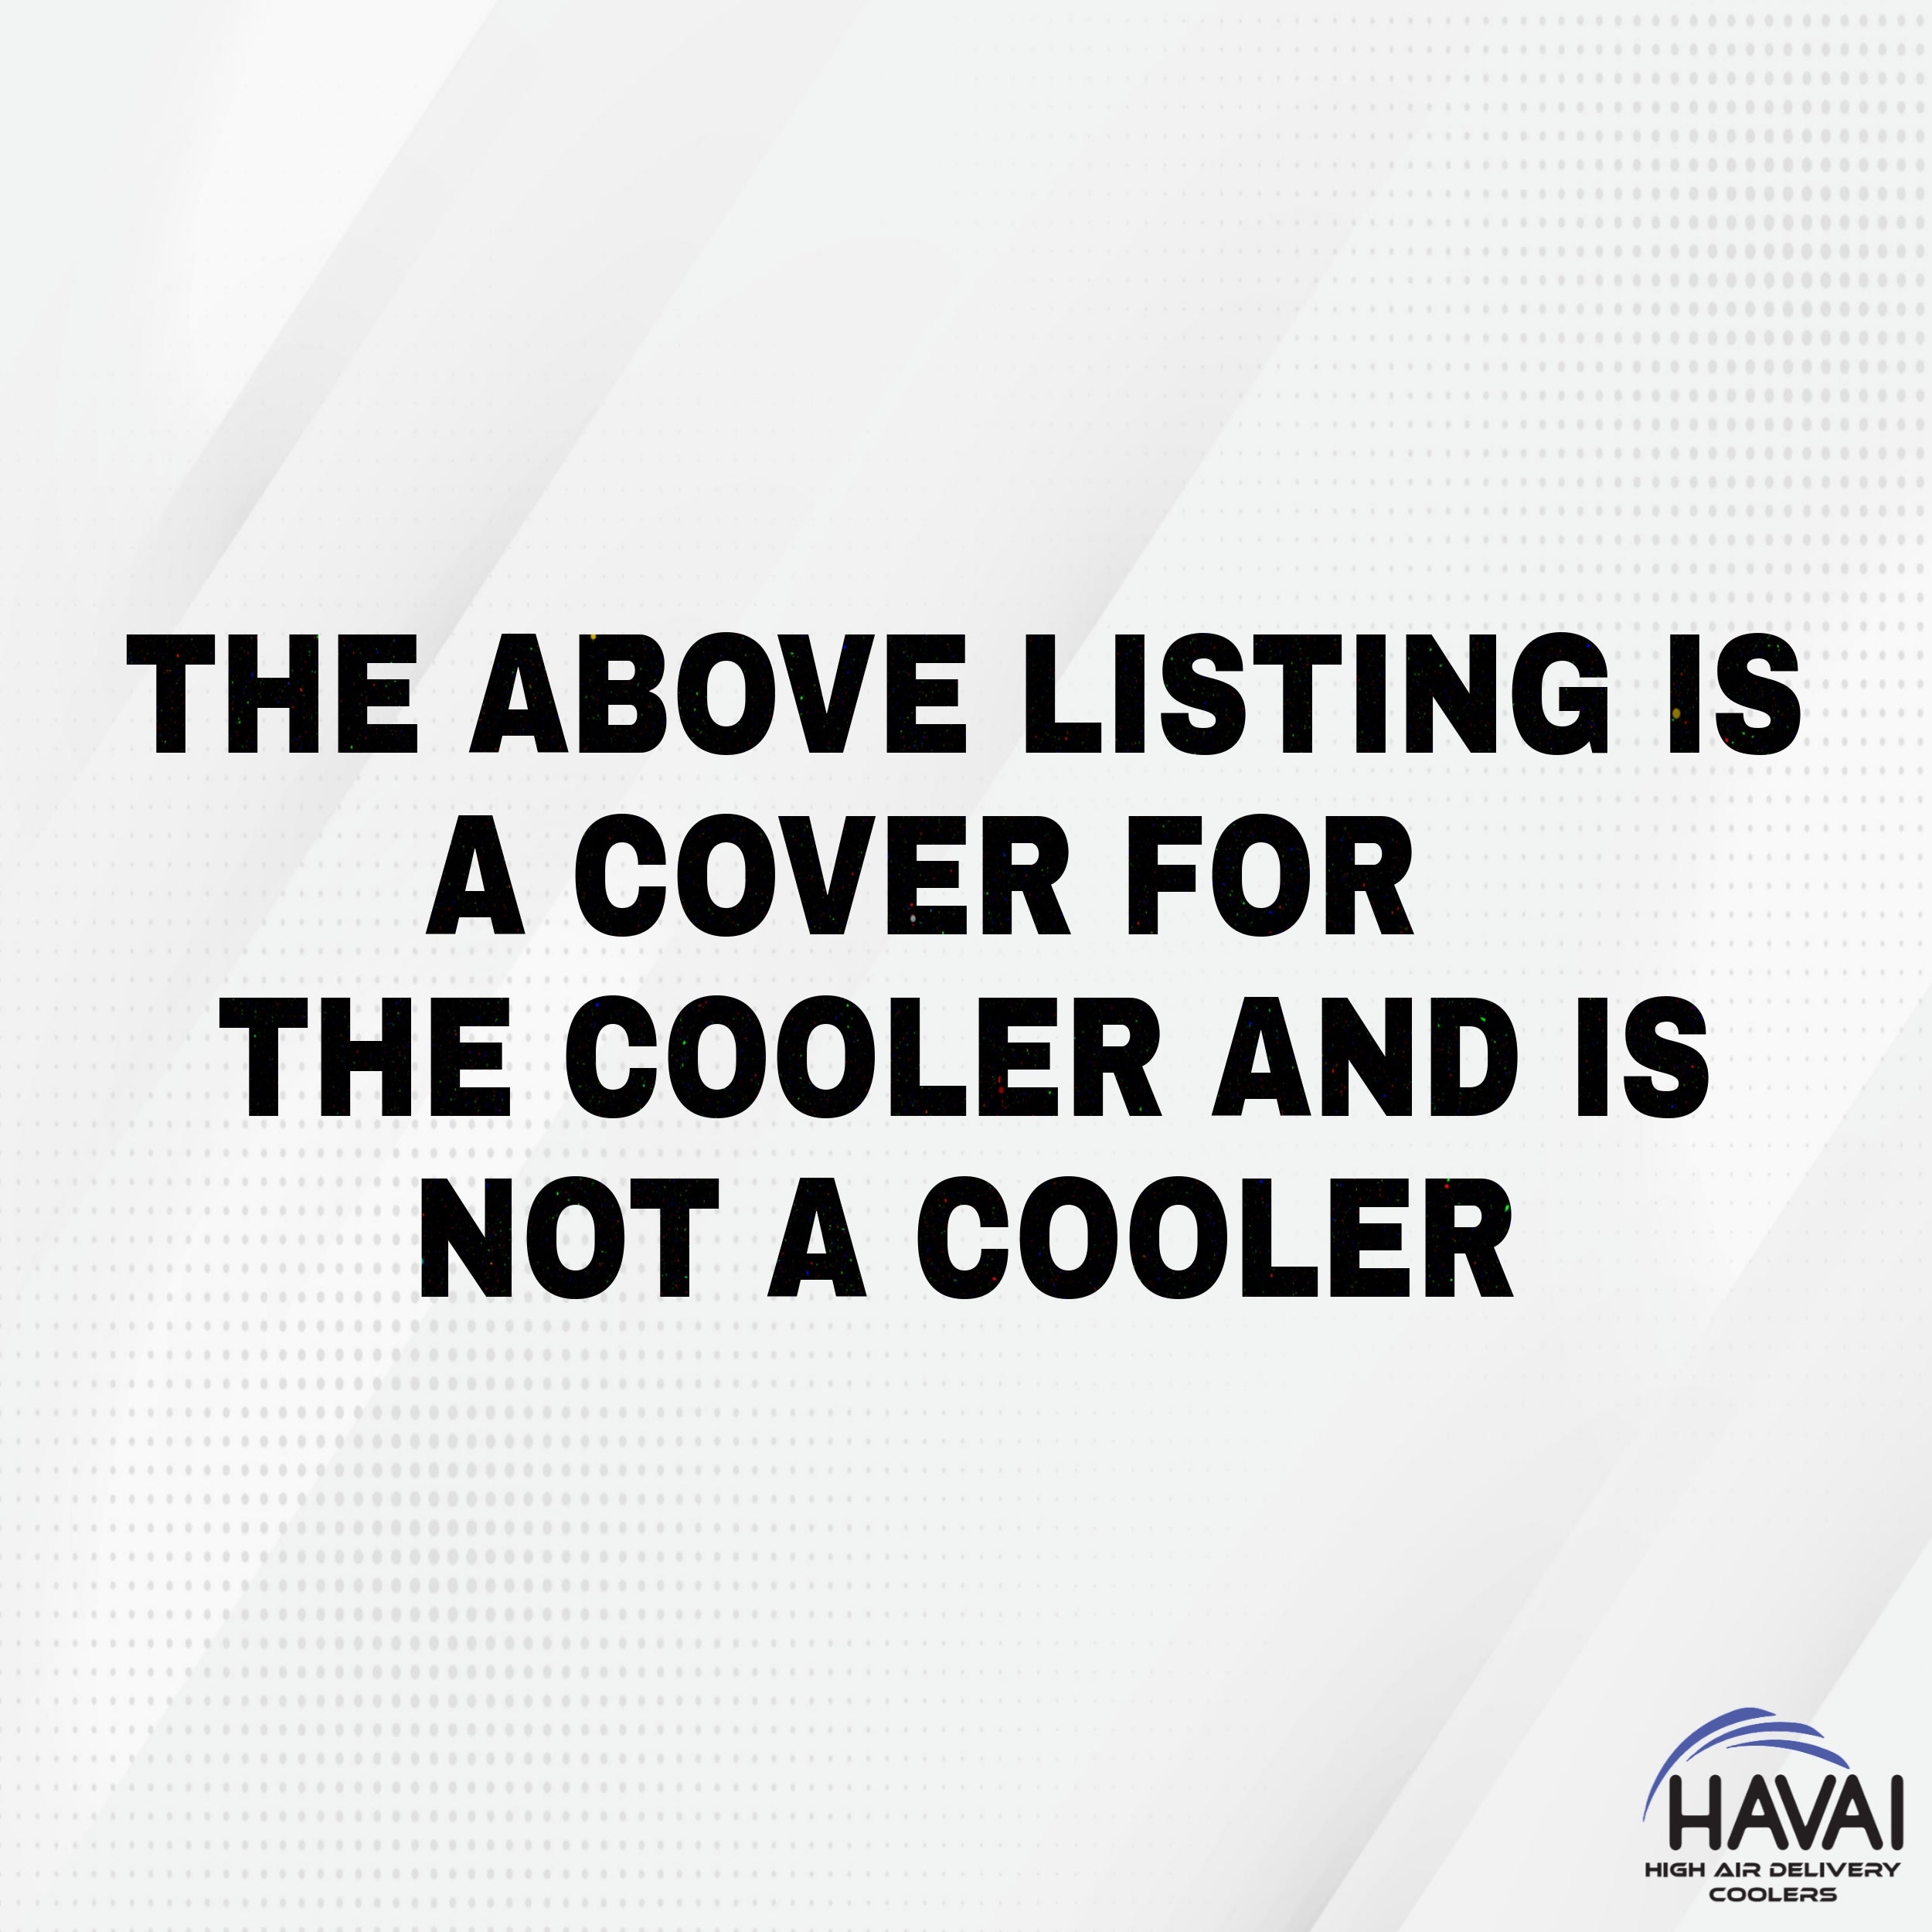 HAVAI Premium Cover for Usha Honeywell CL601PM 55 Litre Desert Cooler 100% Waterproof Cover Size(LXBXH) cm: 74 X 51 X 106